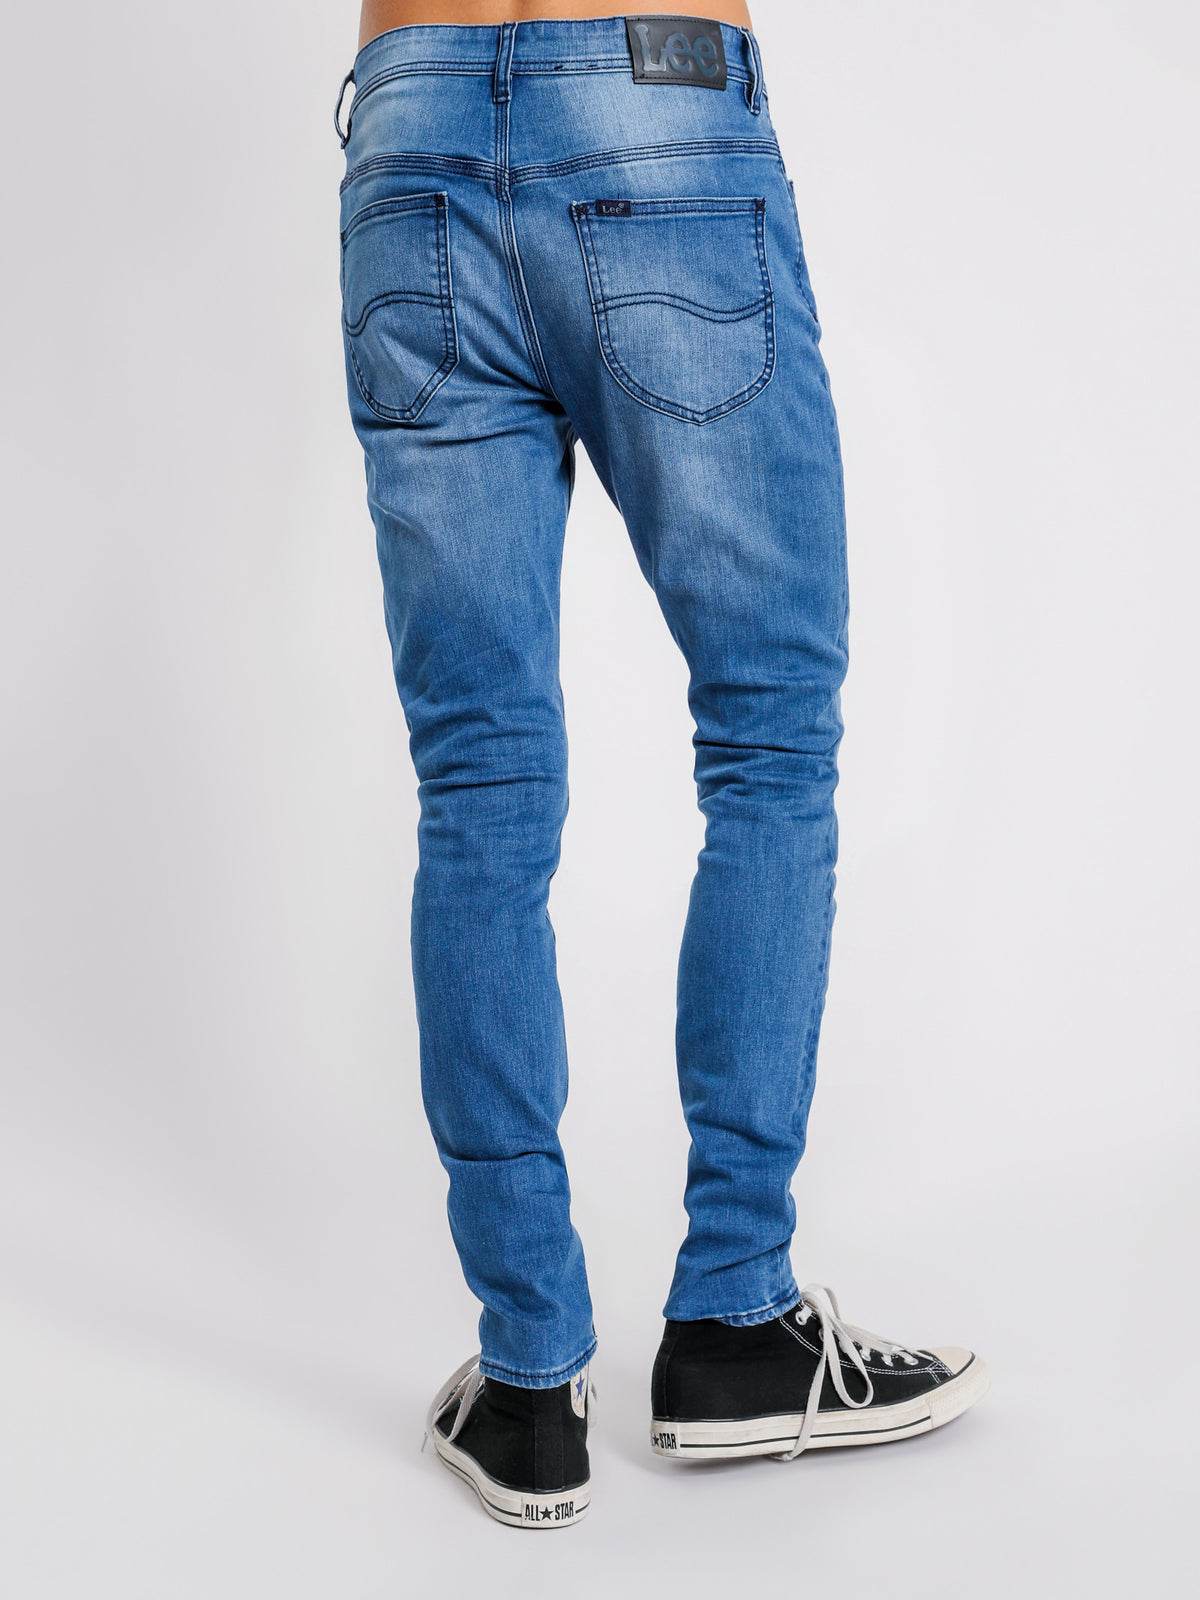 Z-One Jeans in Stellar Blue Denim